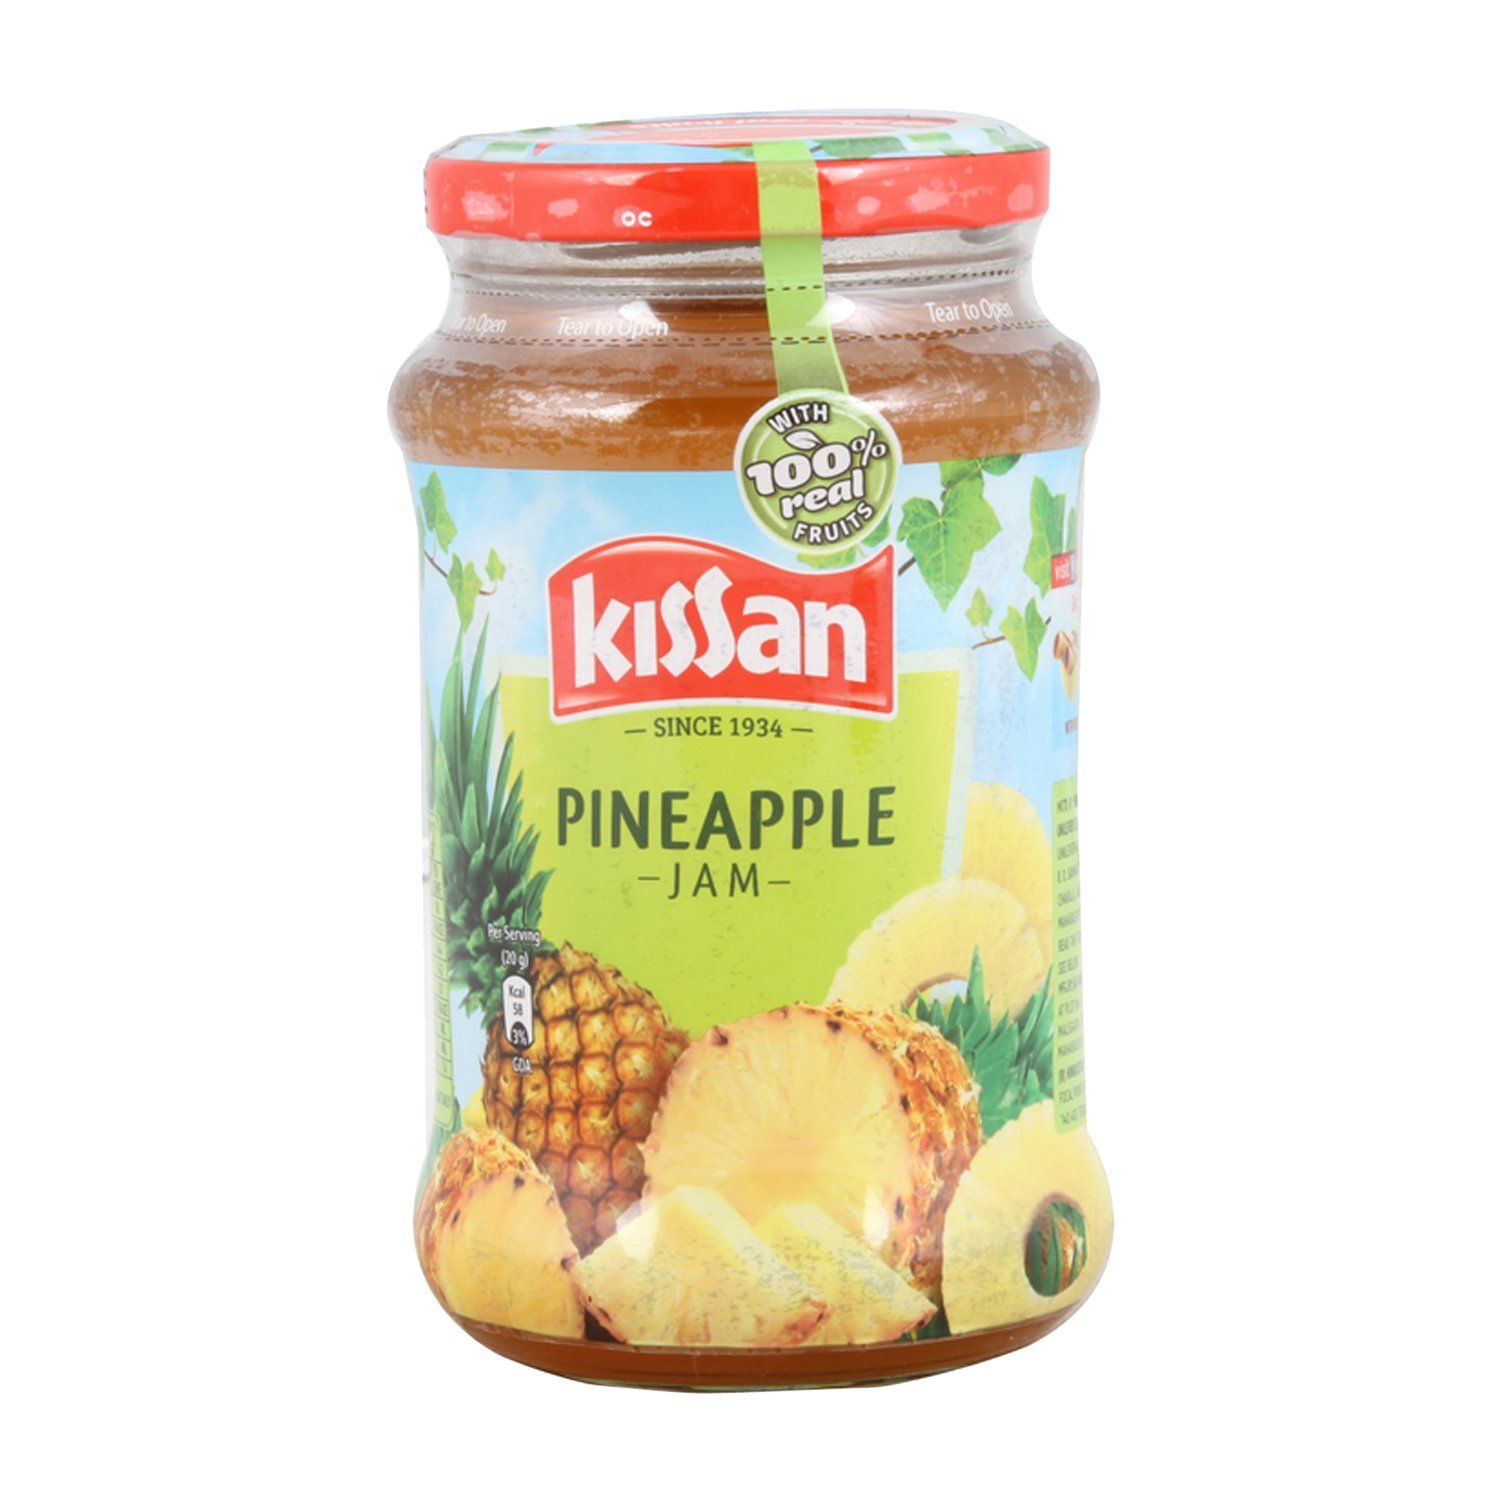 Kissan Pineapple Jam Image